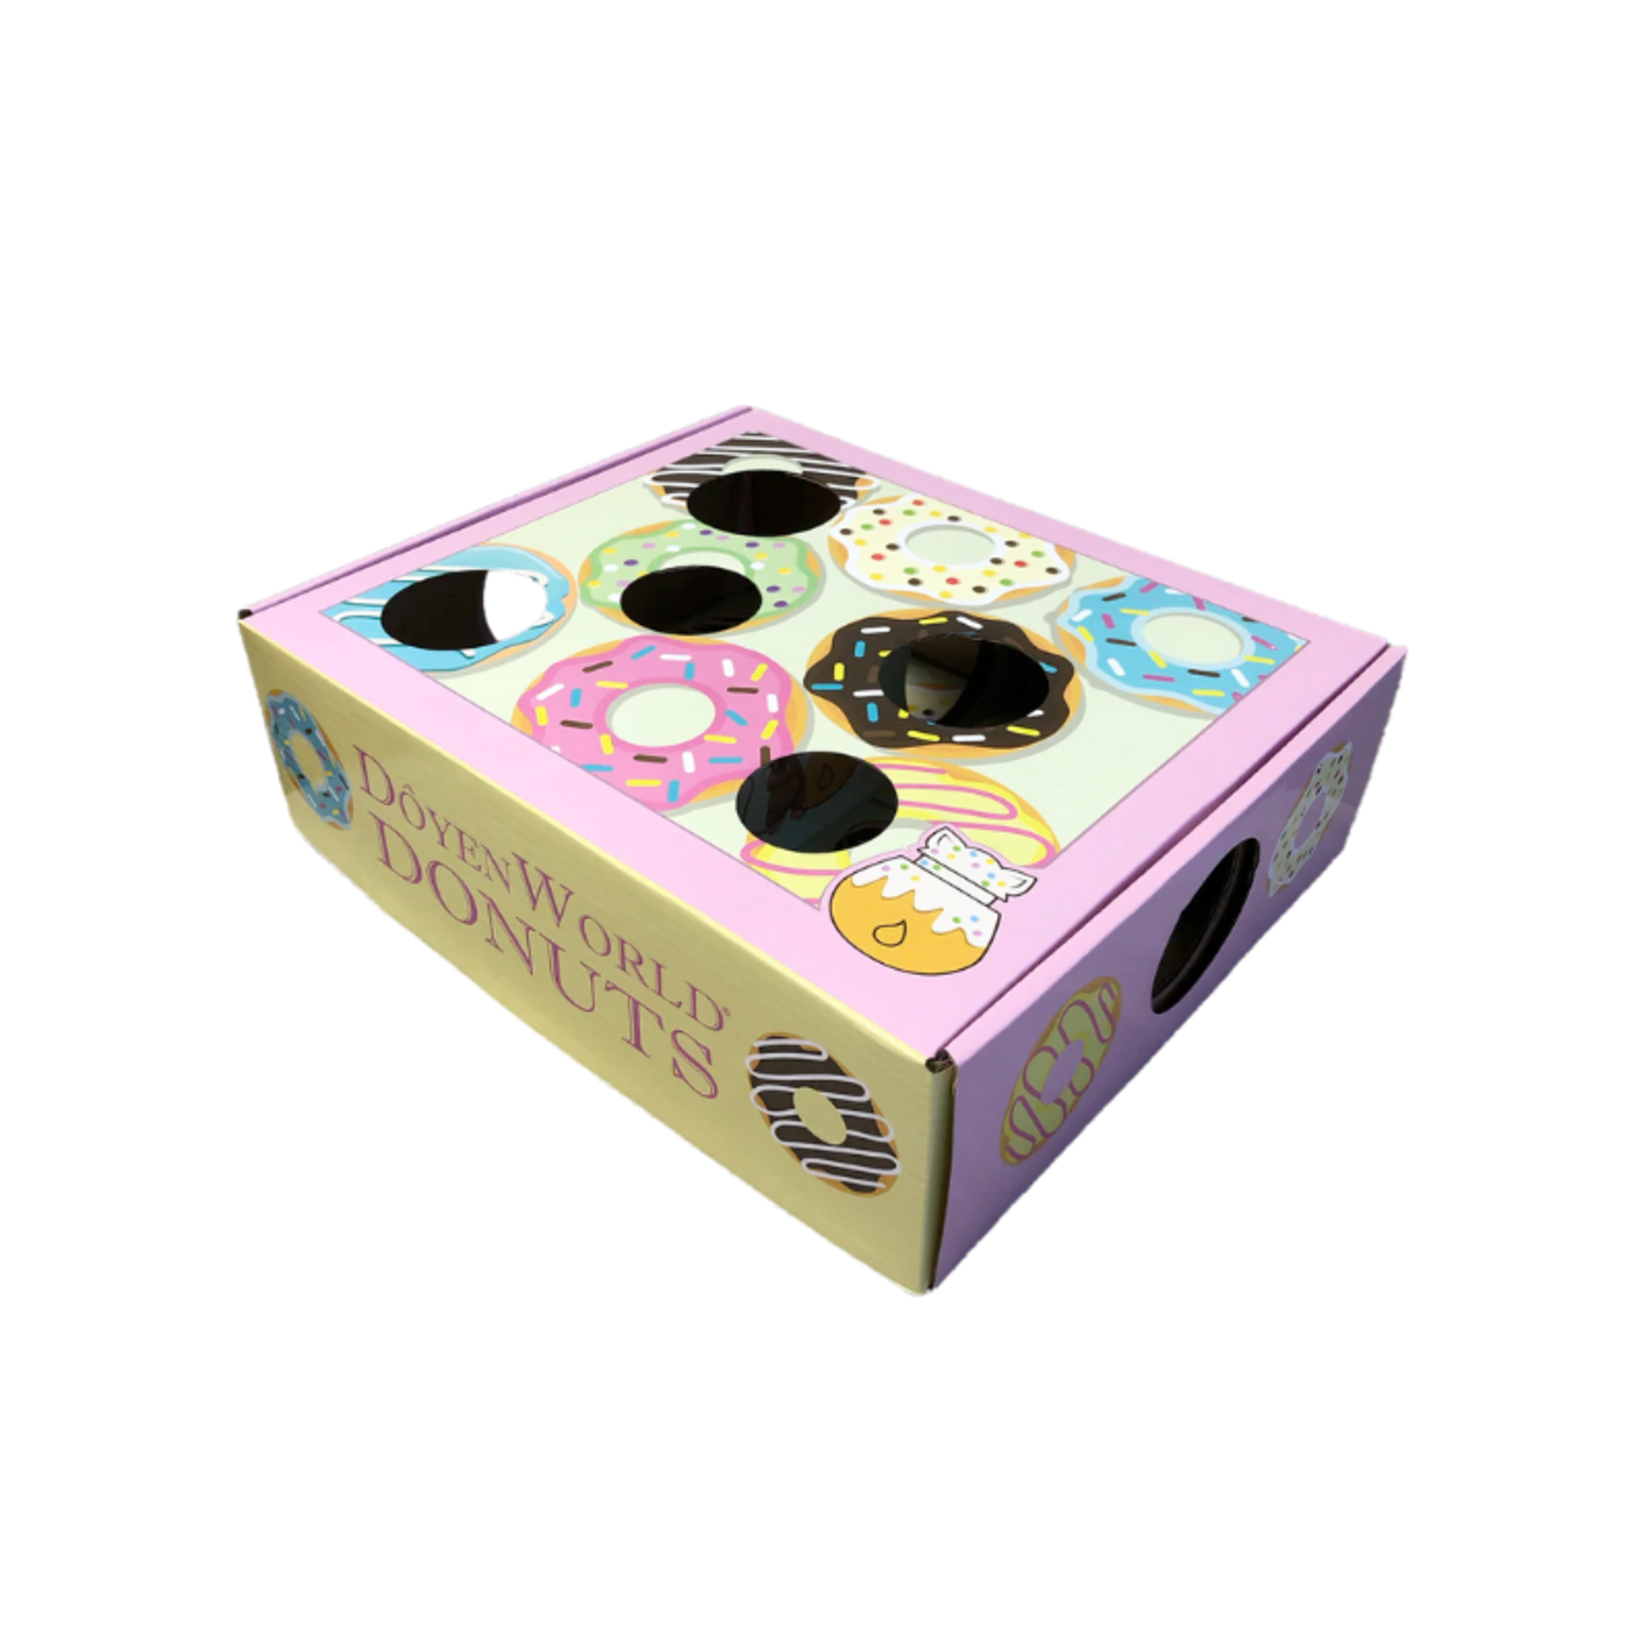 Doyen World Donut Puzzle Box - Cardboard Toy Box - Doyen World